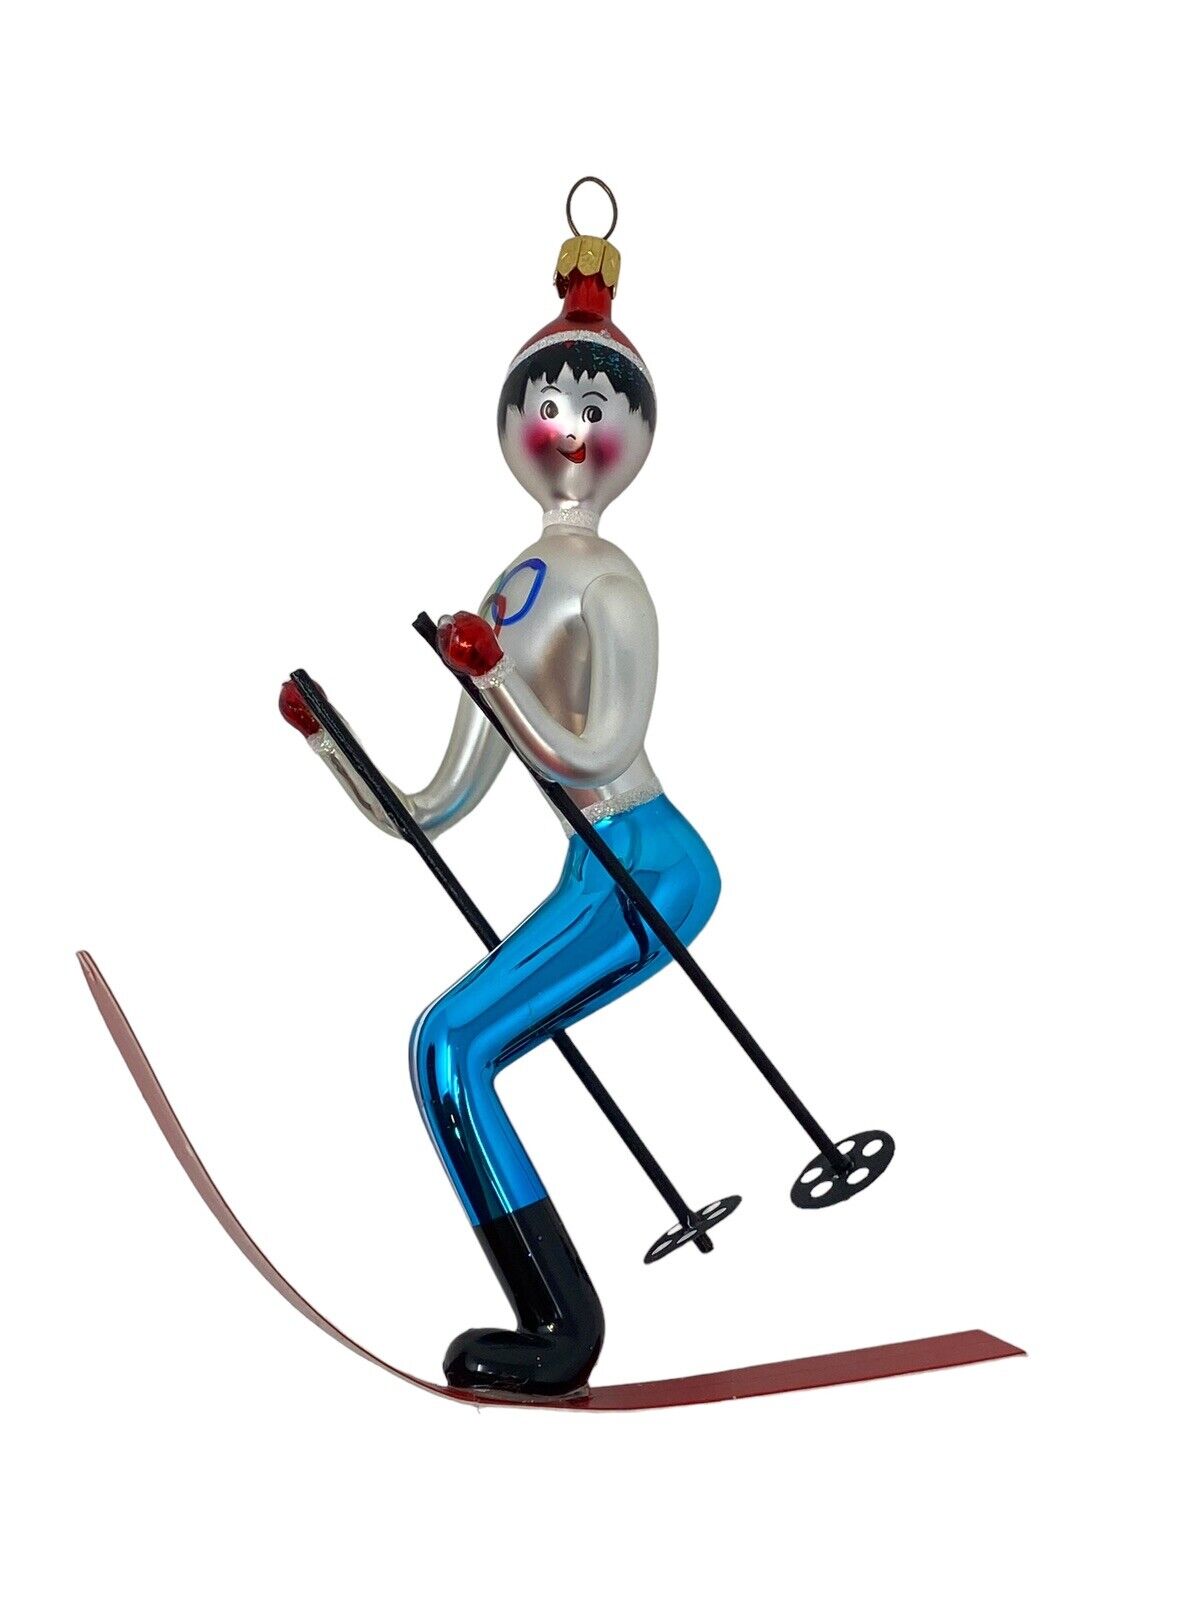 Christopher Radko Tomba Olympic Skier RARE 1994 Italian Ornament Vintage